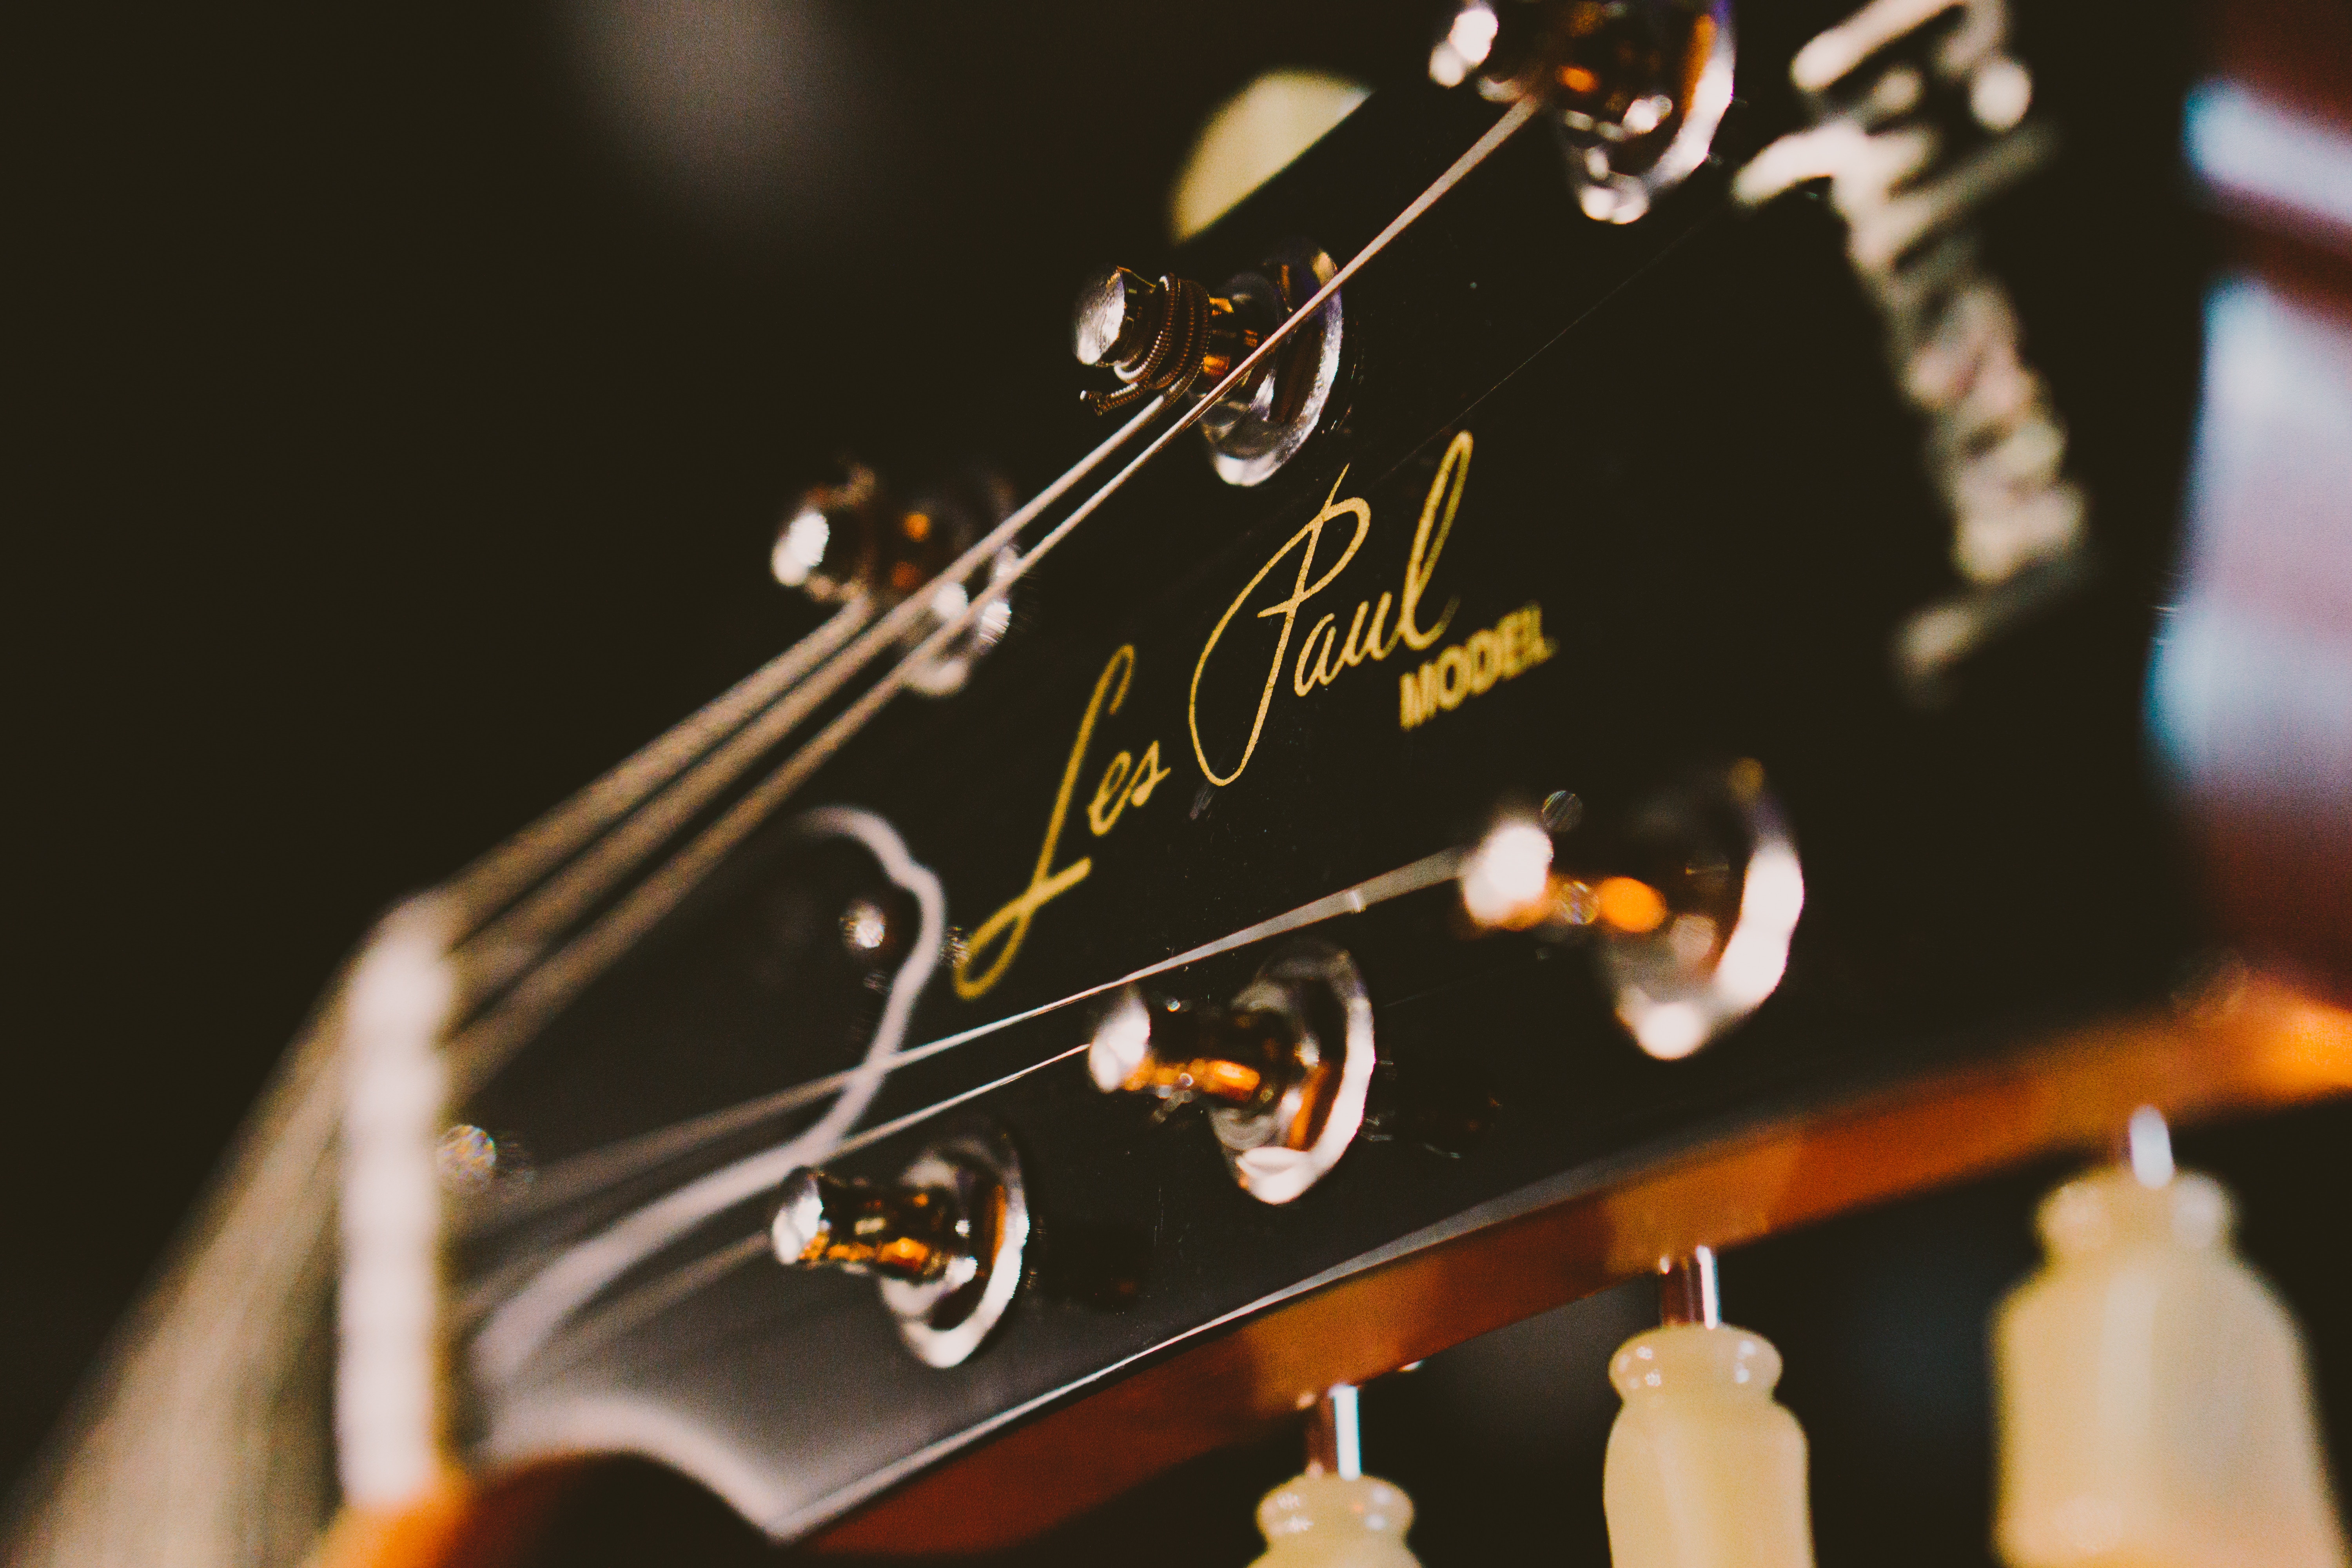 Les Paul Guitar - HD Wallpaper 